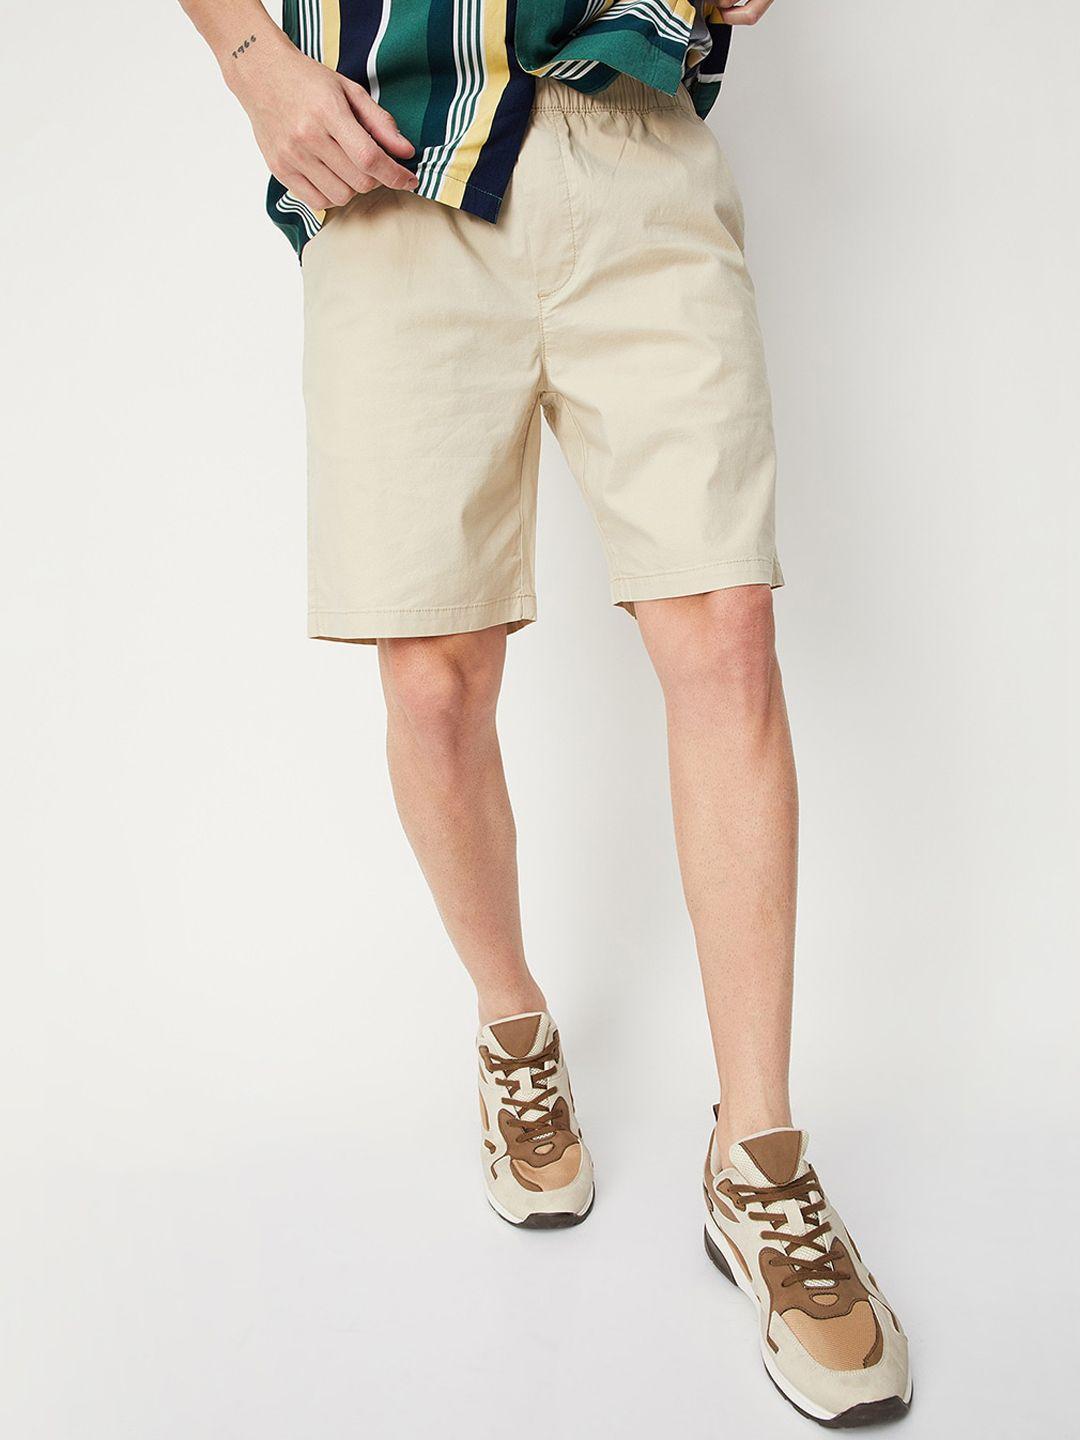 max-men-mid-rise-cotton-shorts